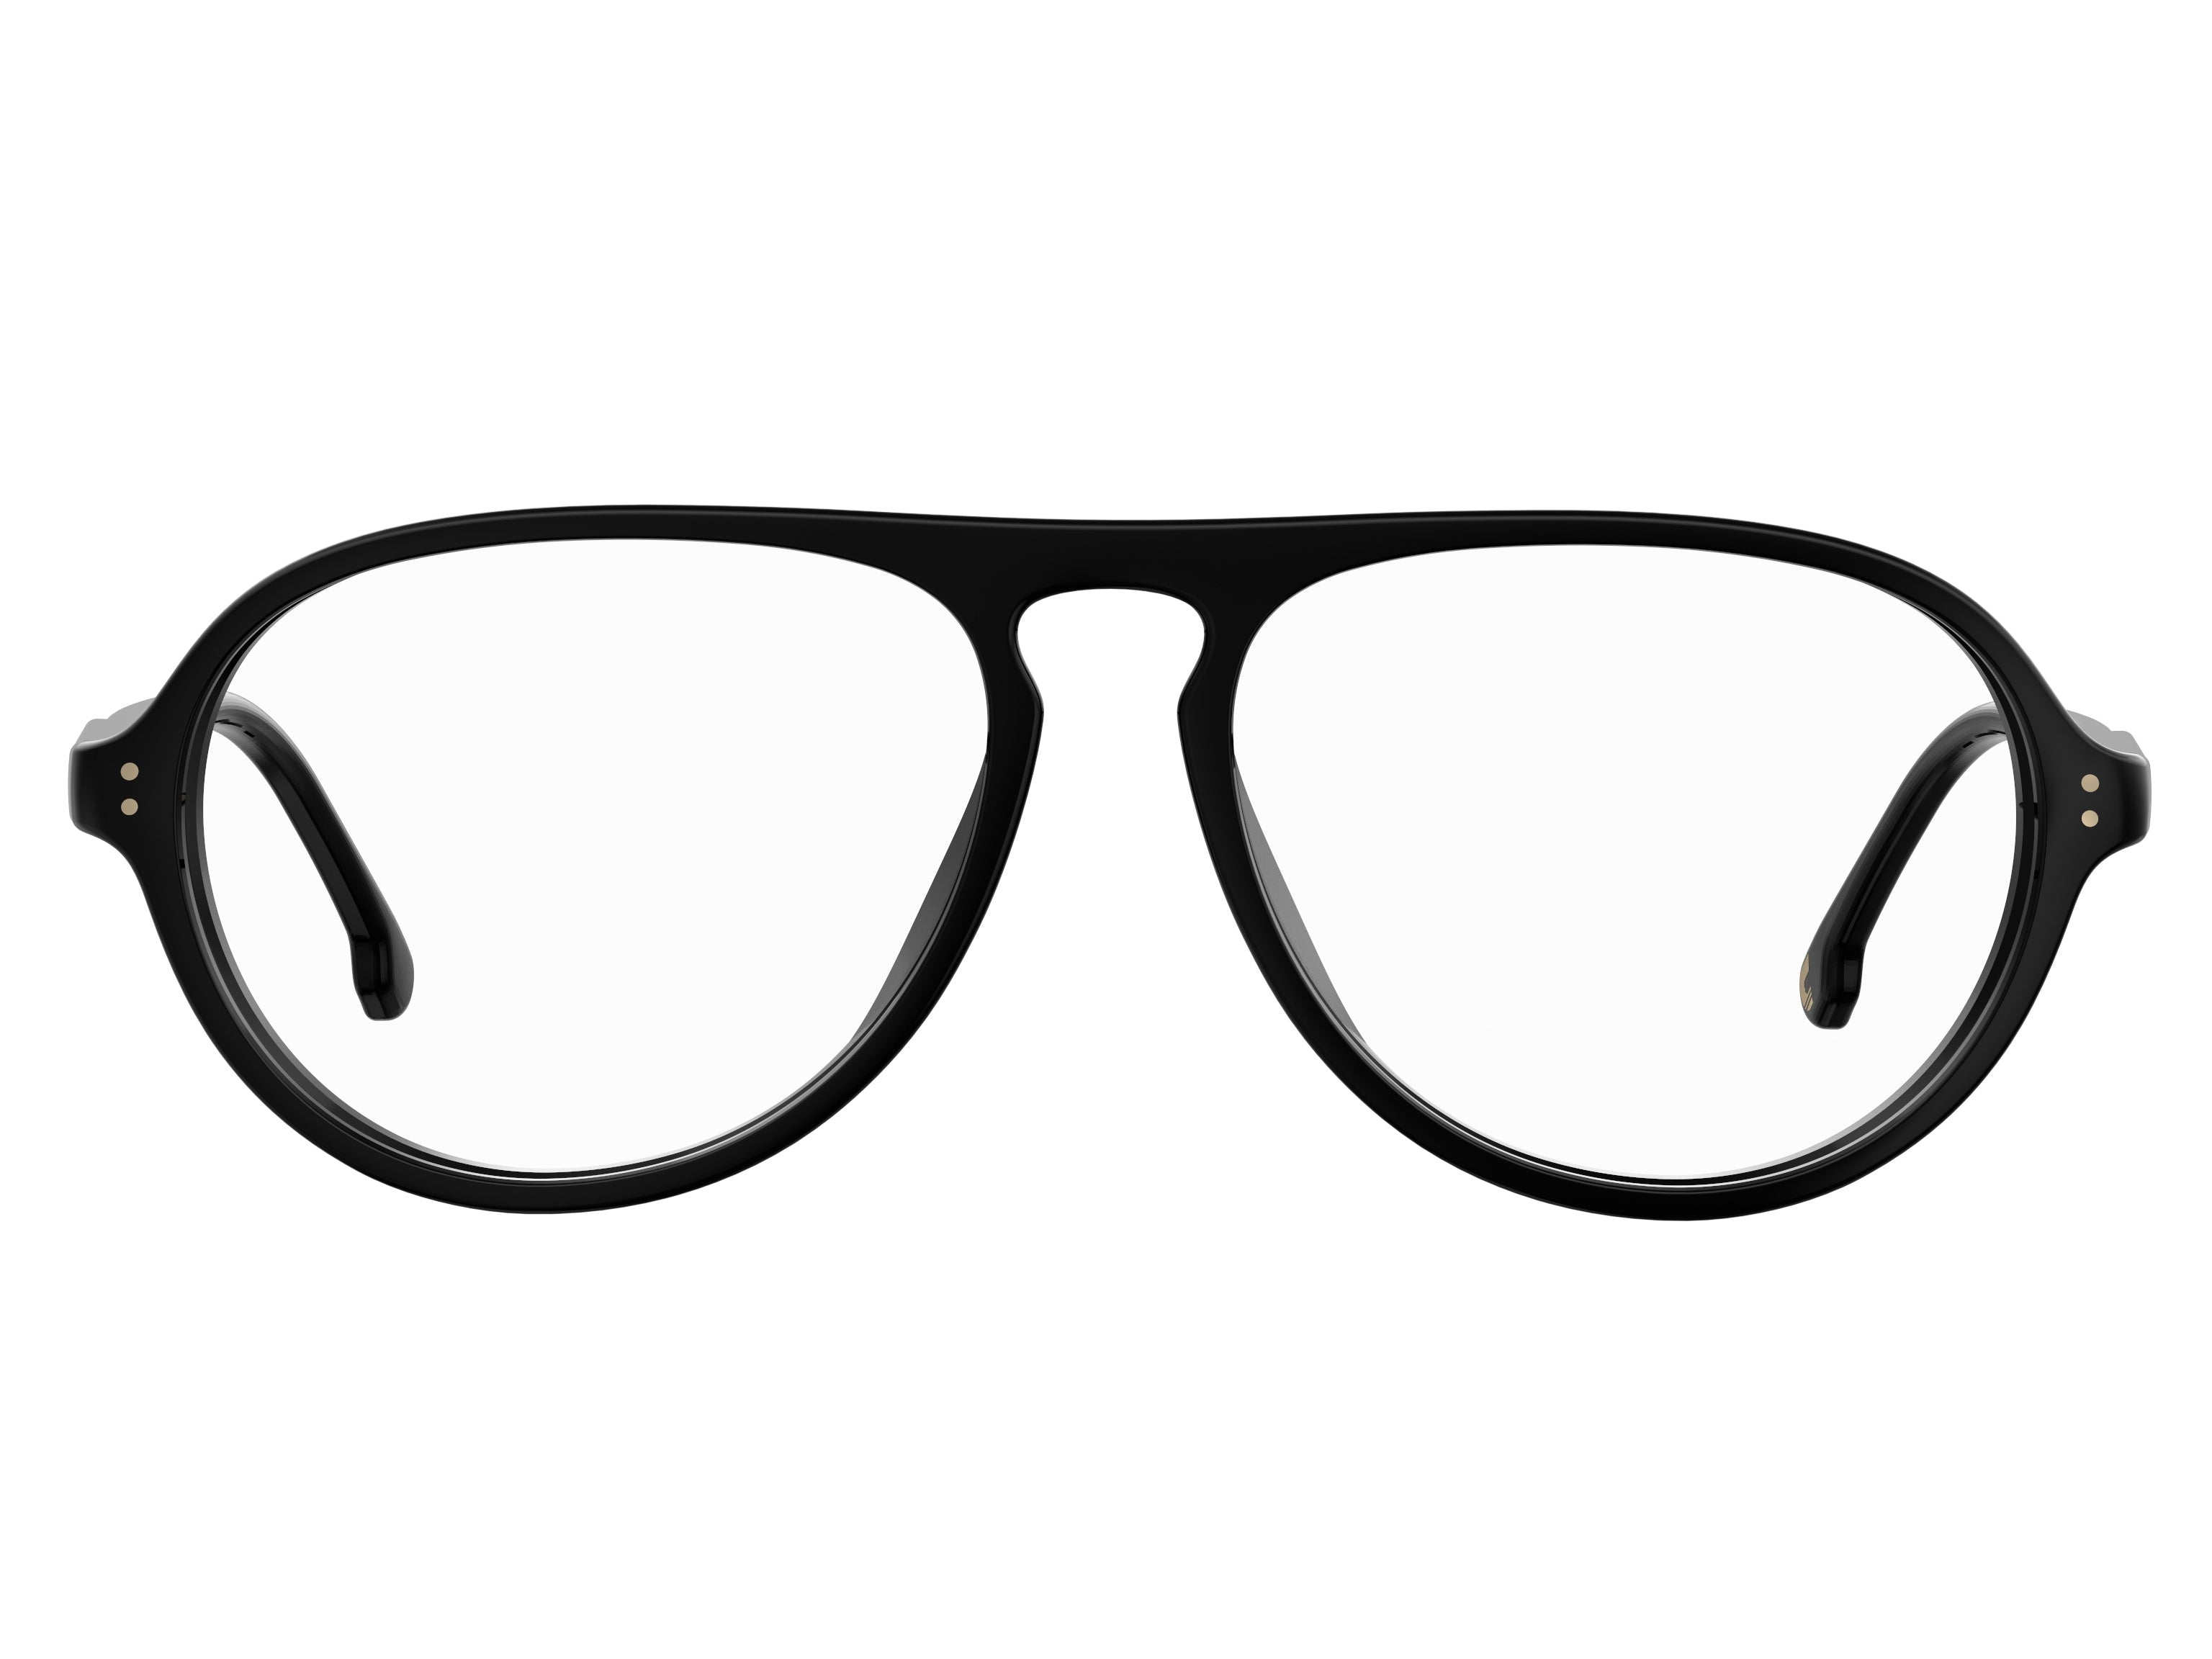 Buy new Carrera Eyewear Online at Discount Prices  -  Fakeeh Vision